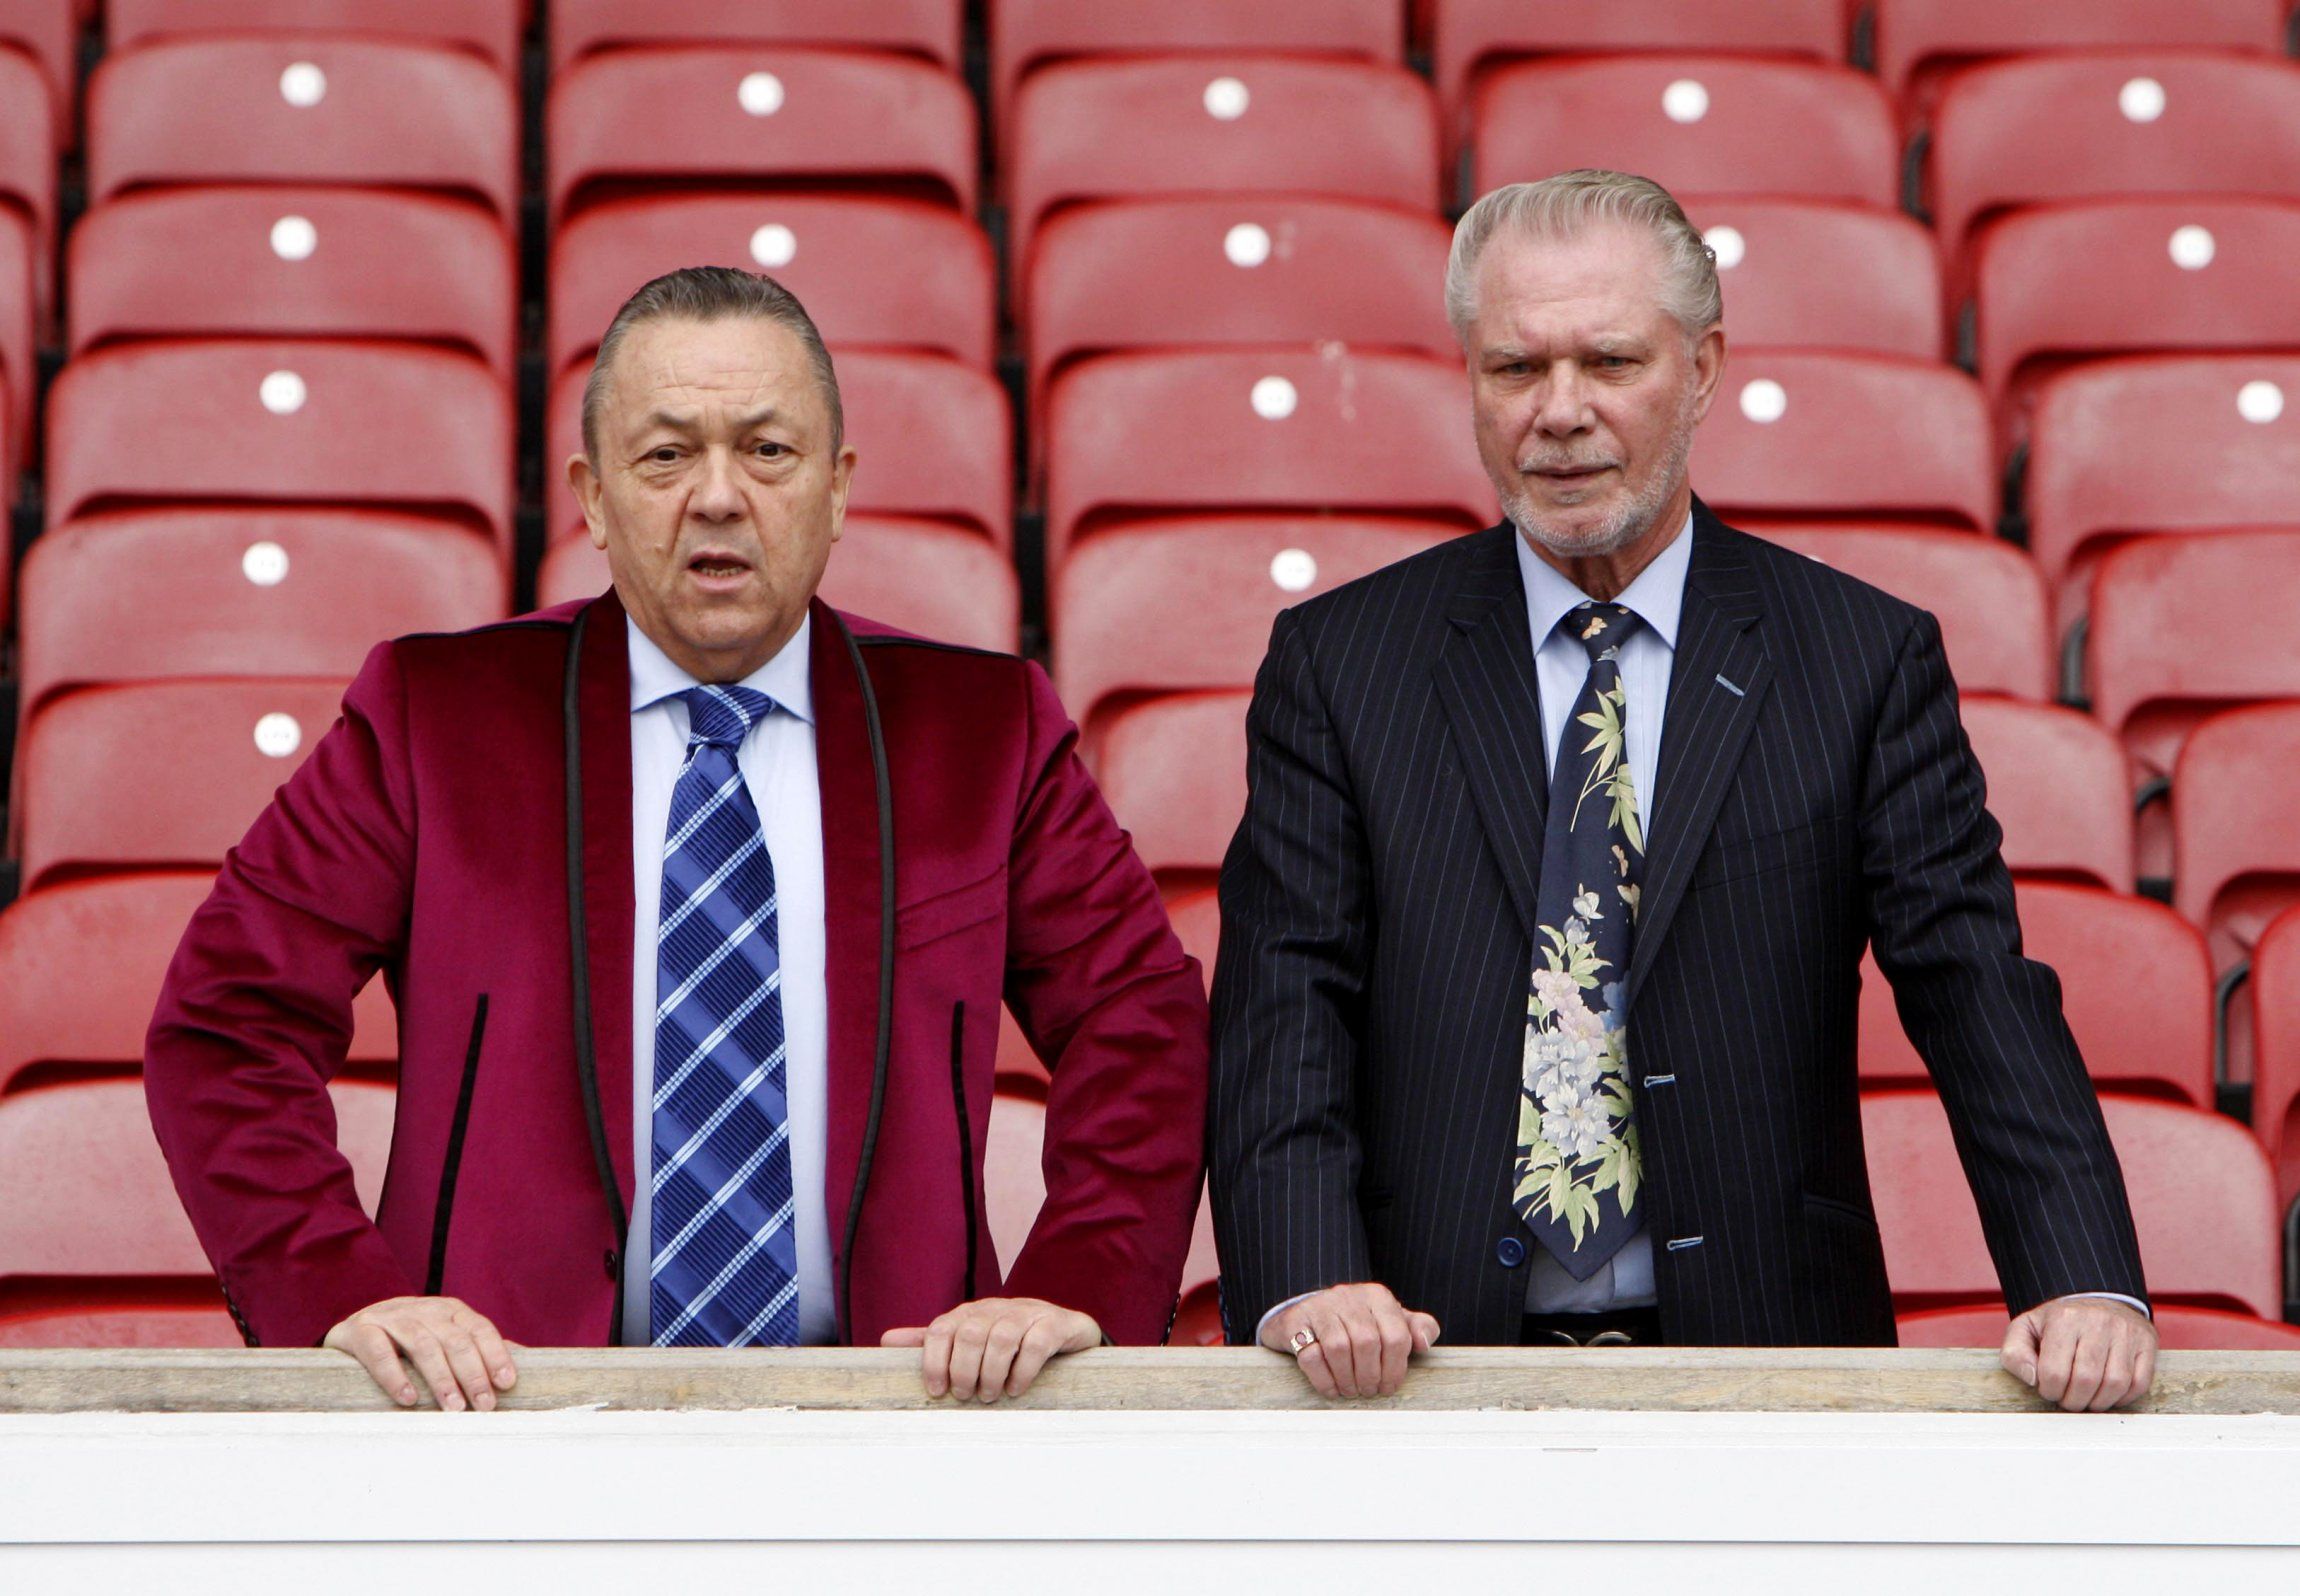 West Ham owners David Gold and David Sullivan